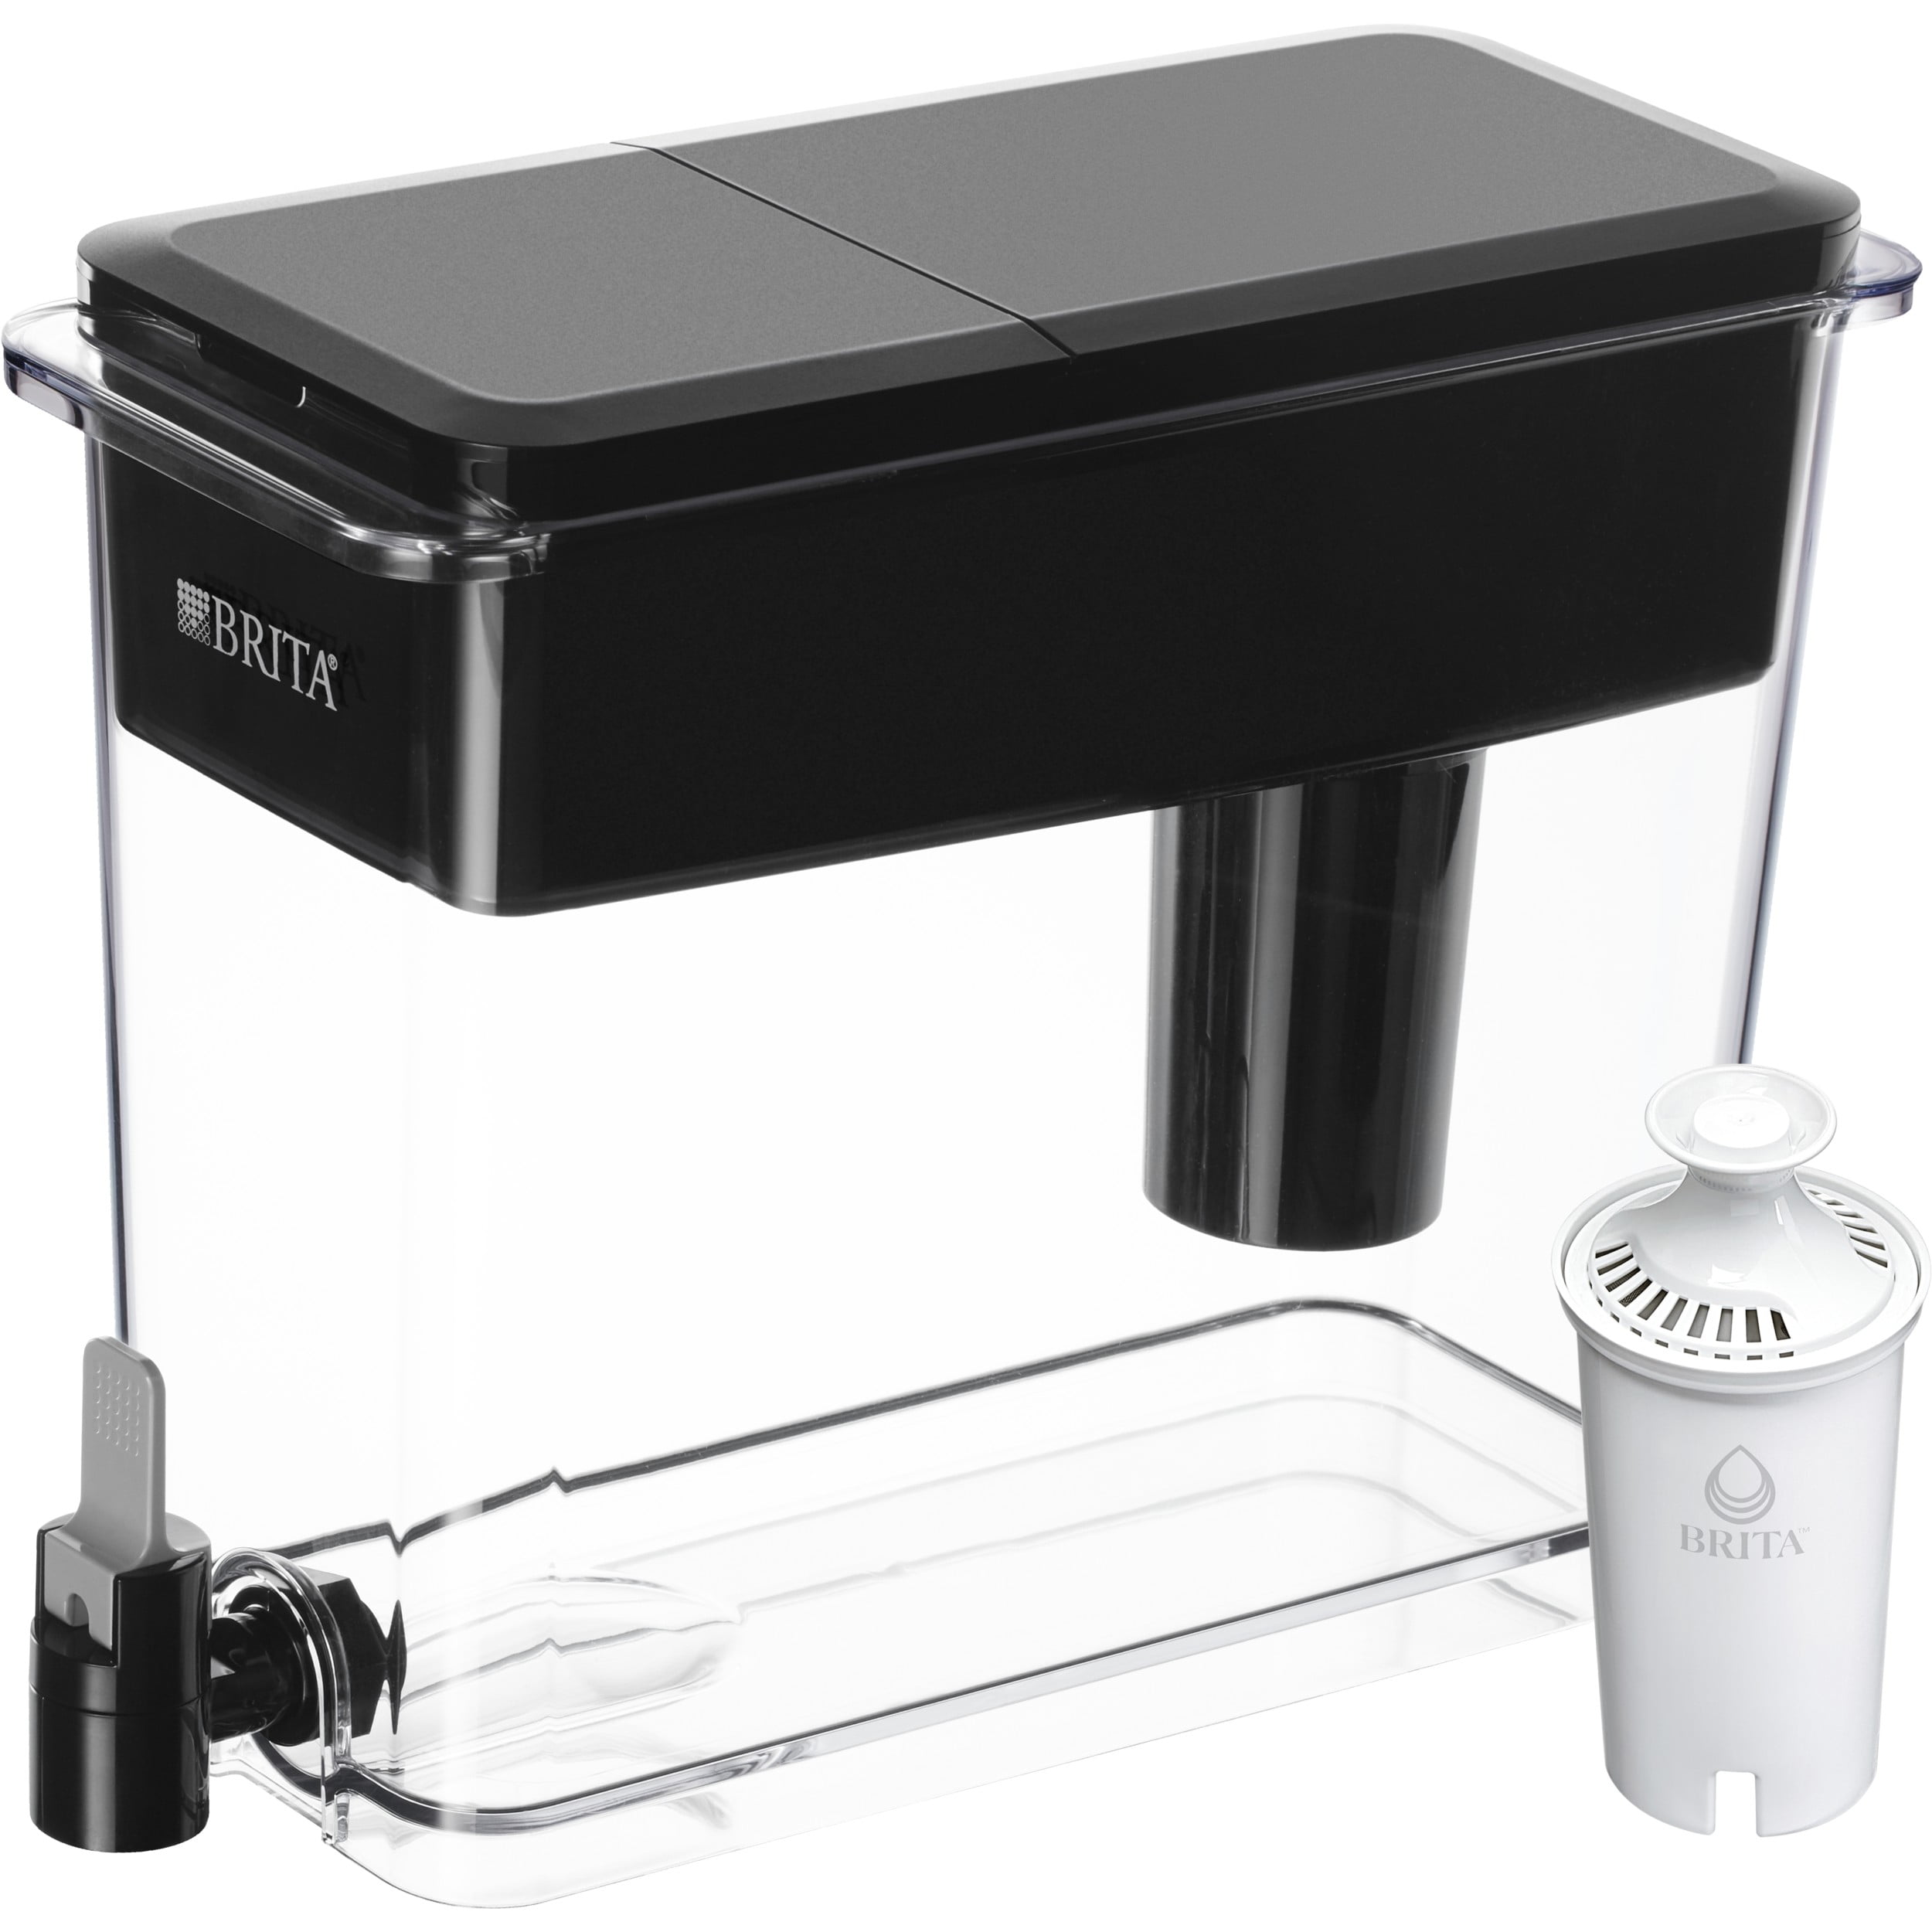 Brita Ultramax Water Filter Dispenser, 27 Cup - Black